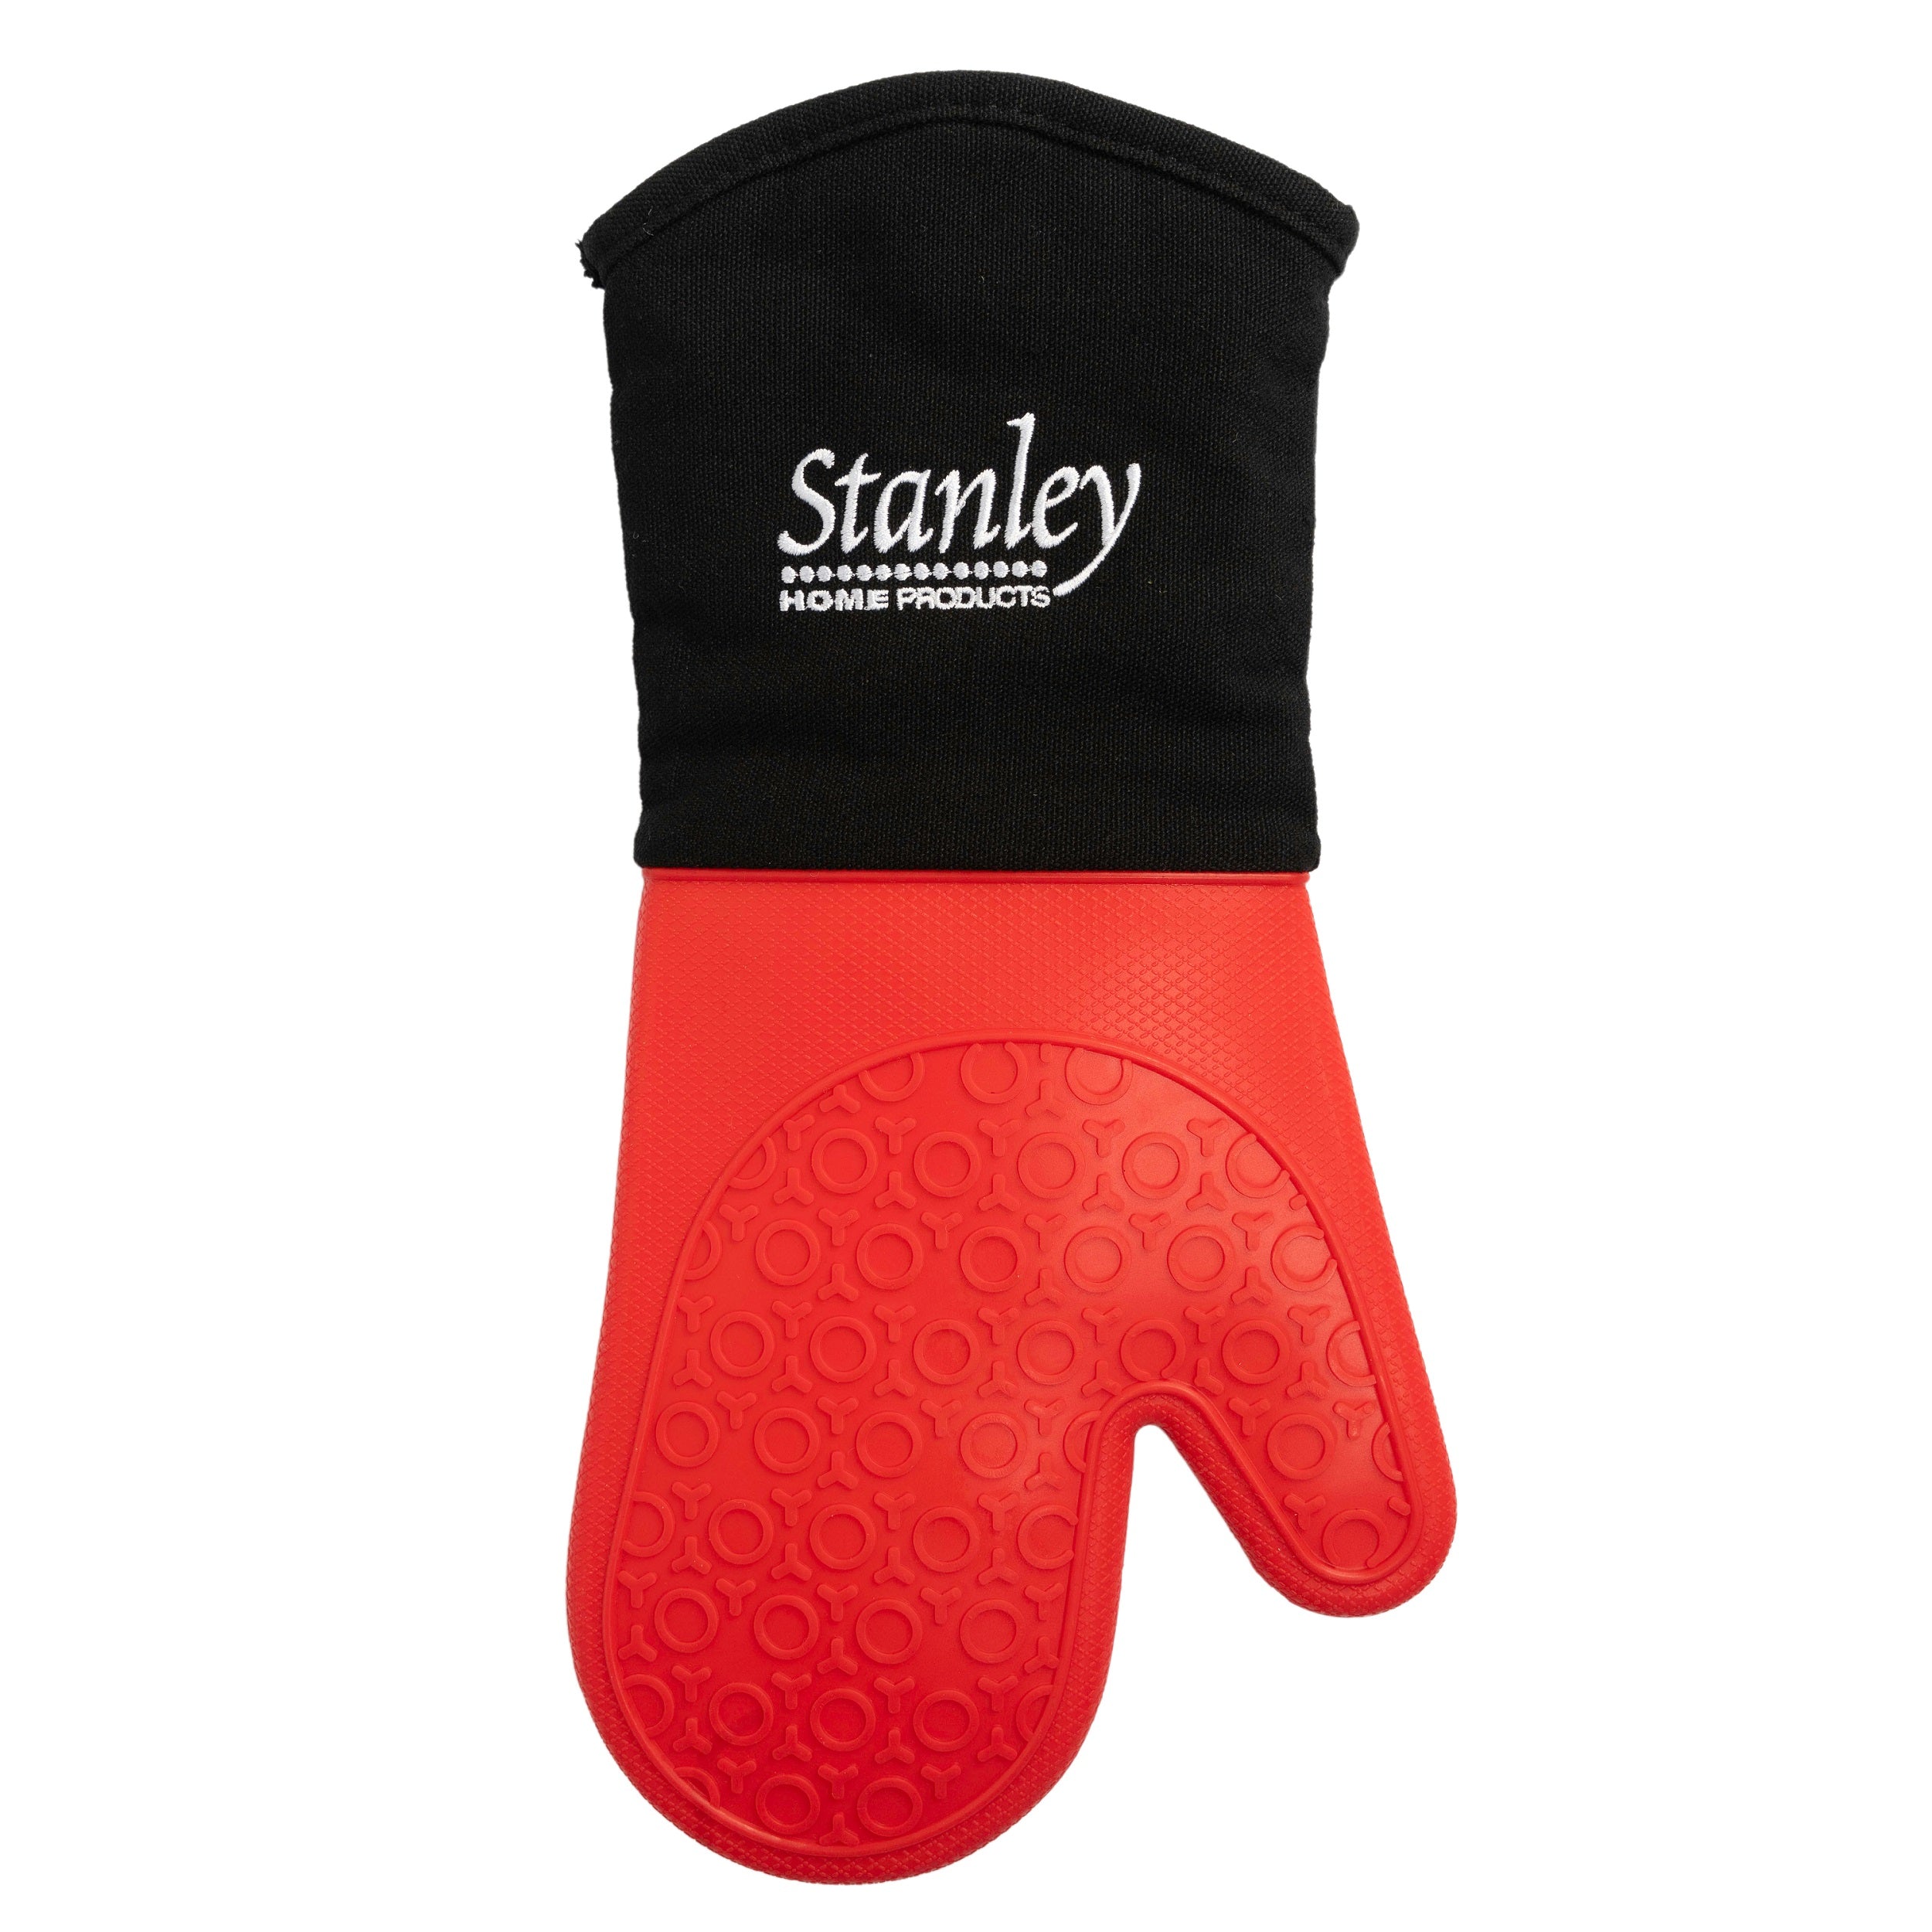 Stanley Foam Co. Supplies Product Menu